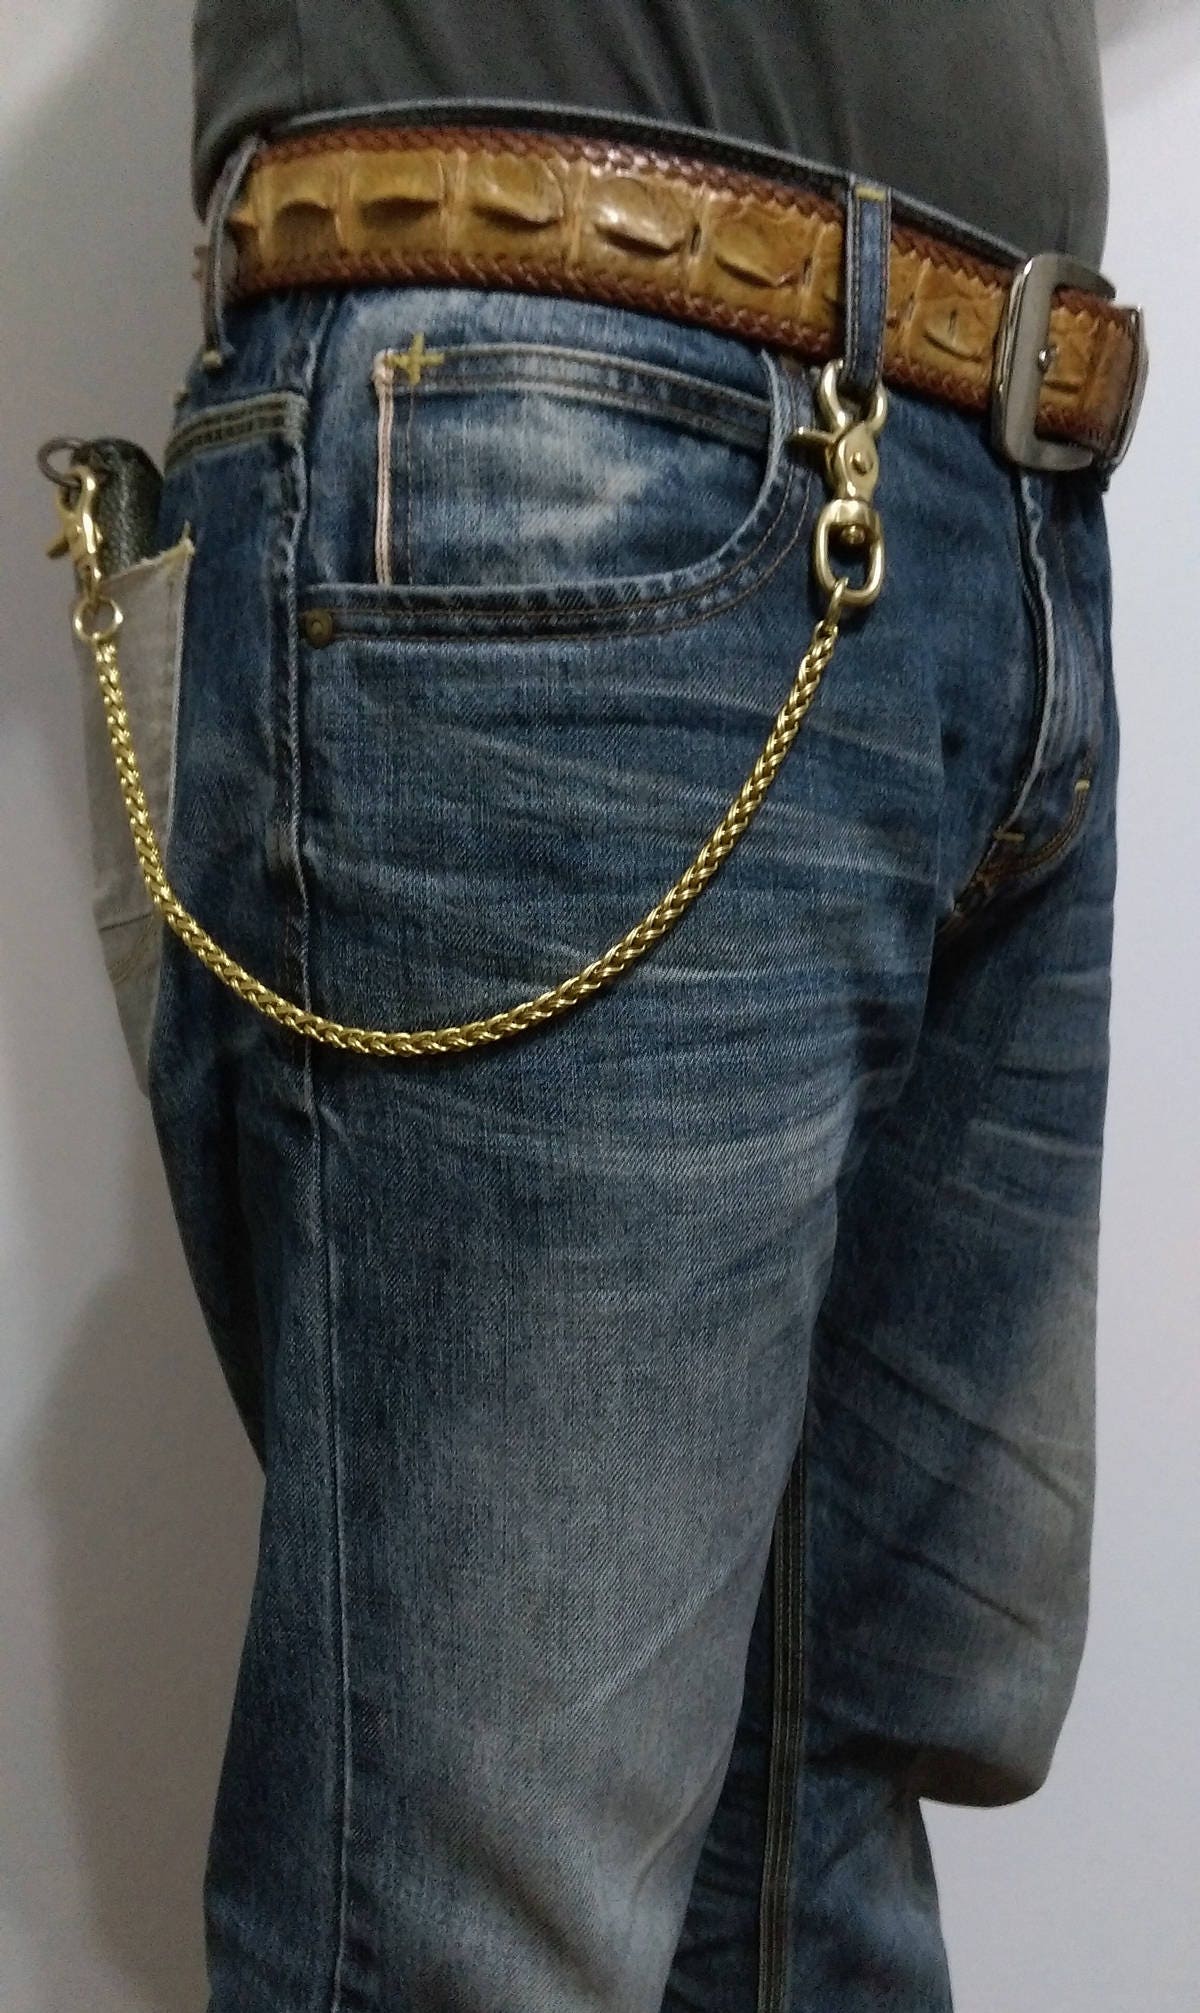 Thelovertime Brass Belt Hook Wallet Chain